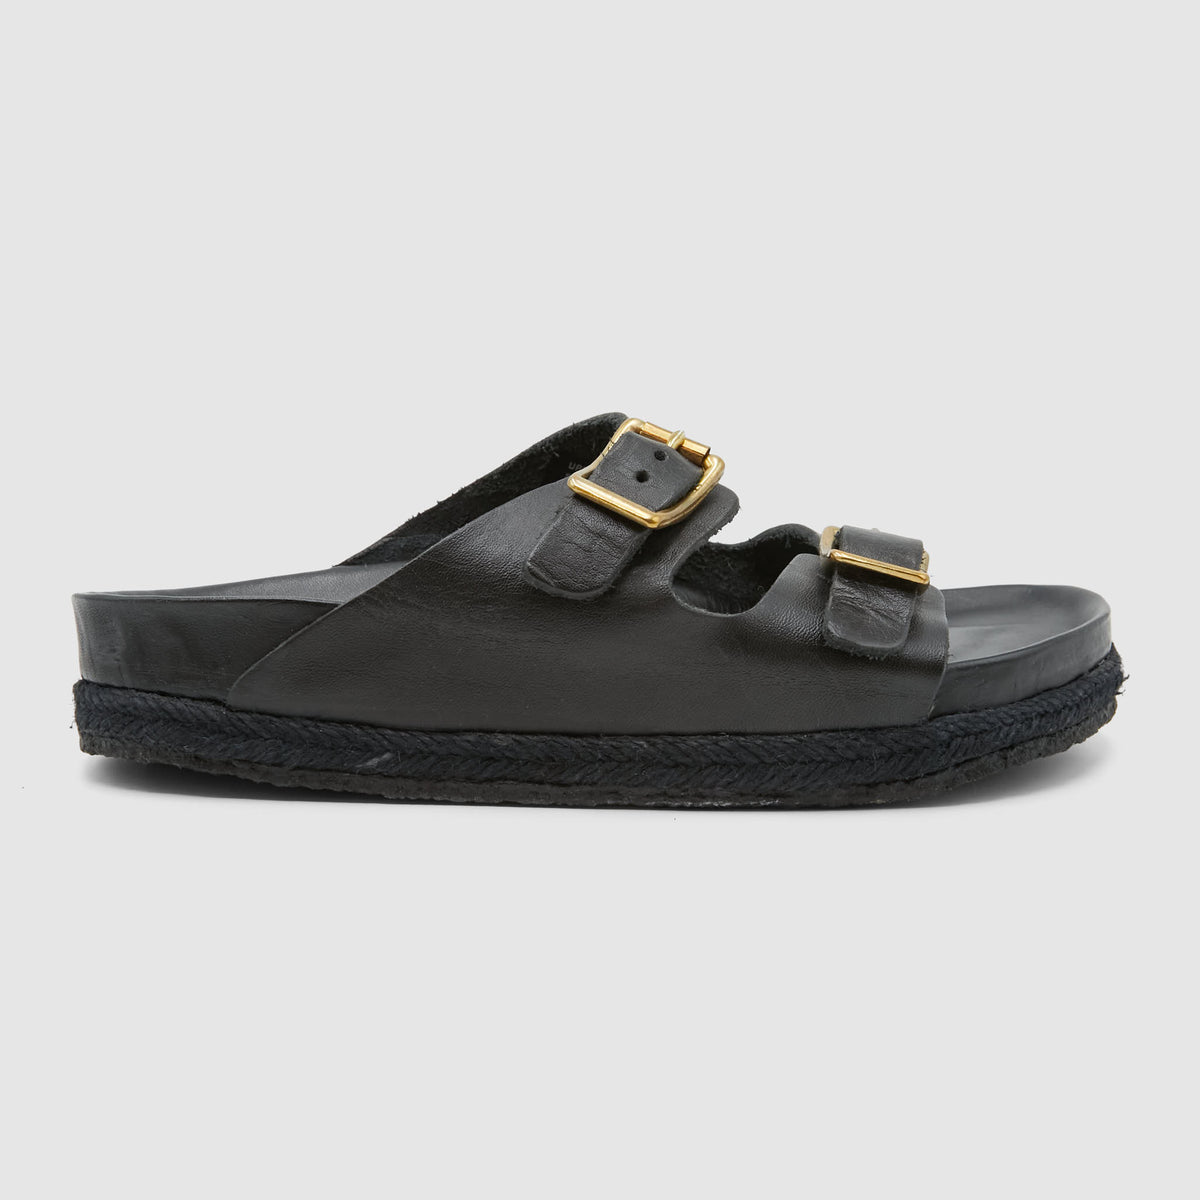 Yuketen Comfort Leather Sandals